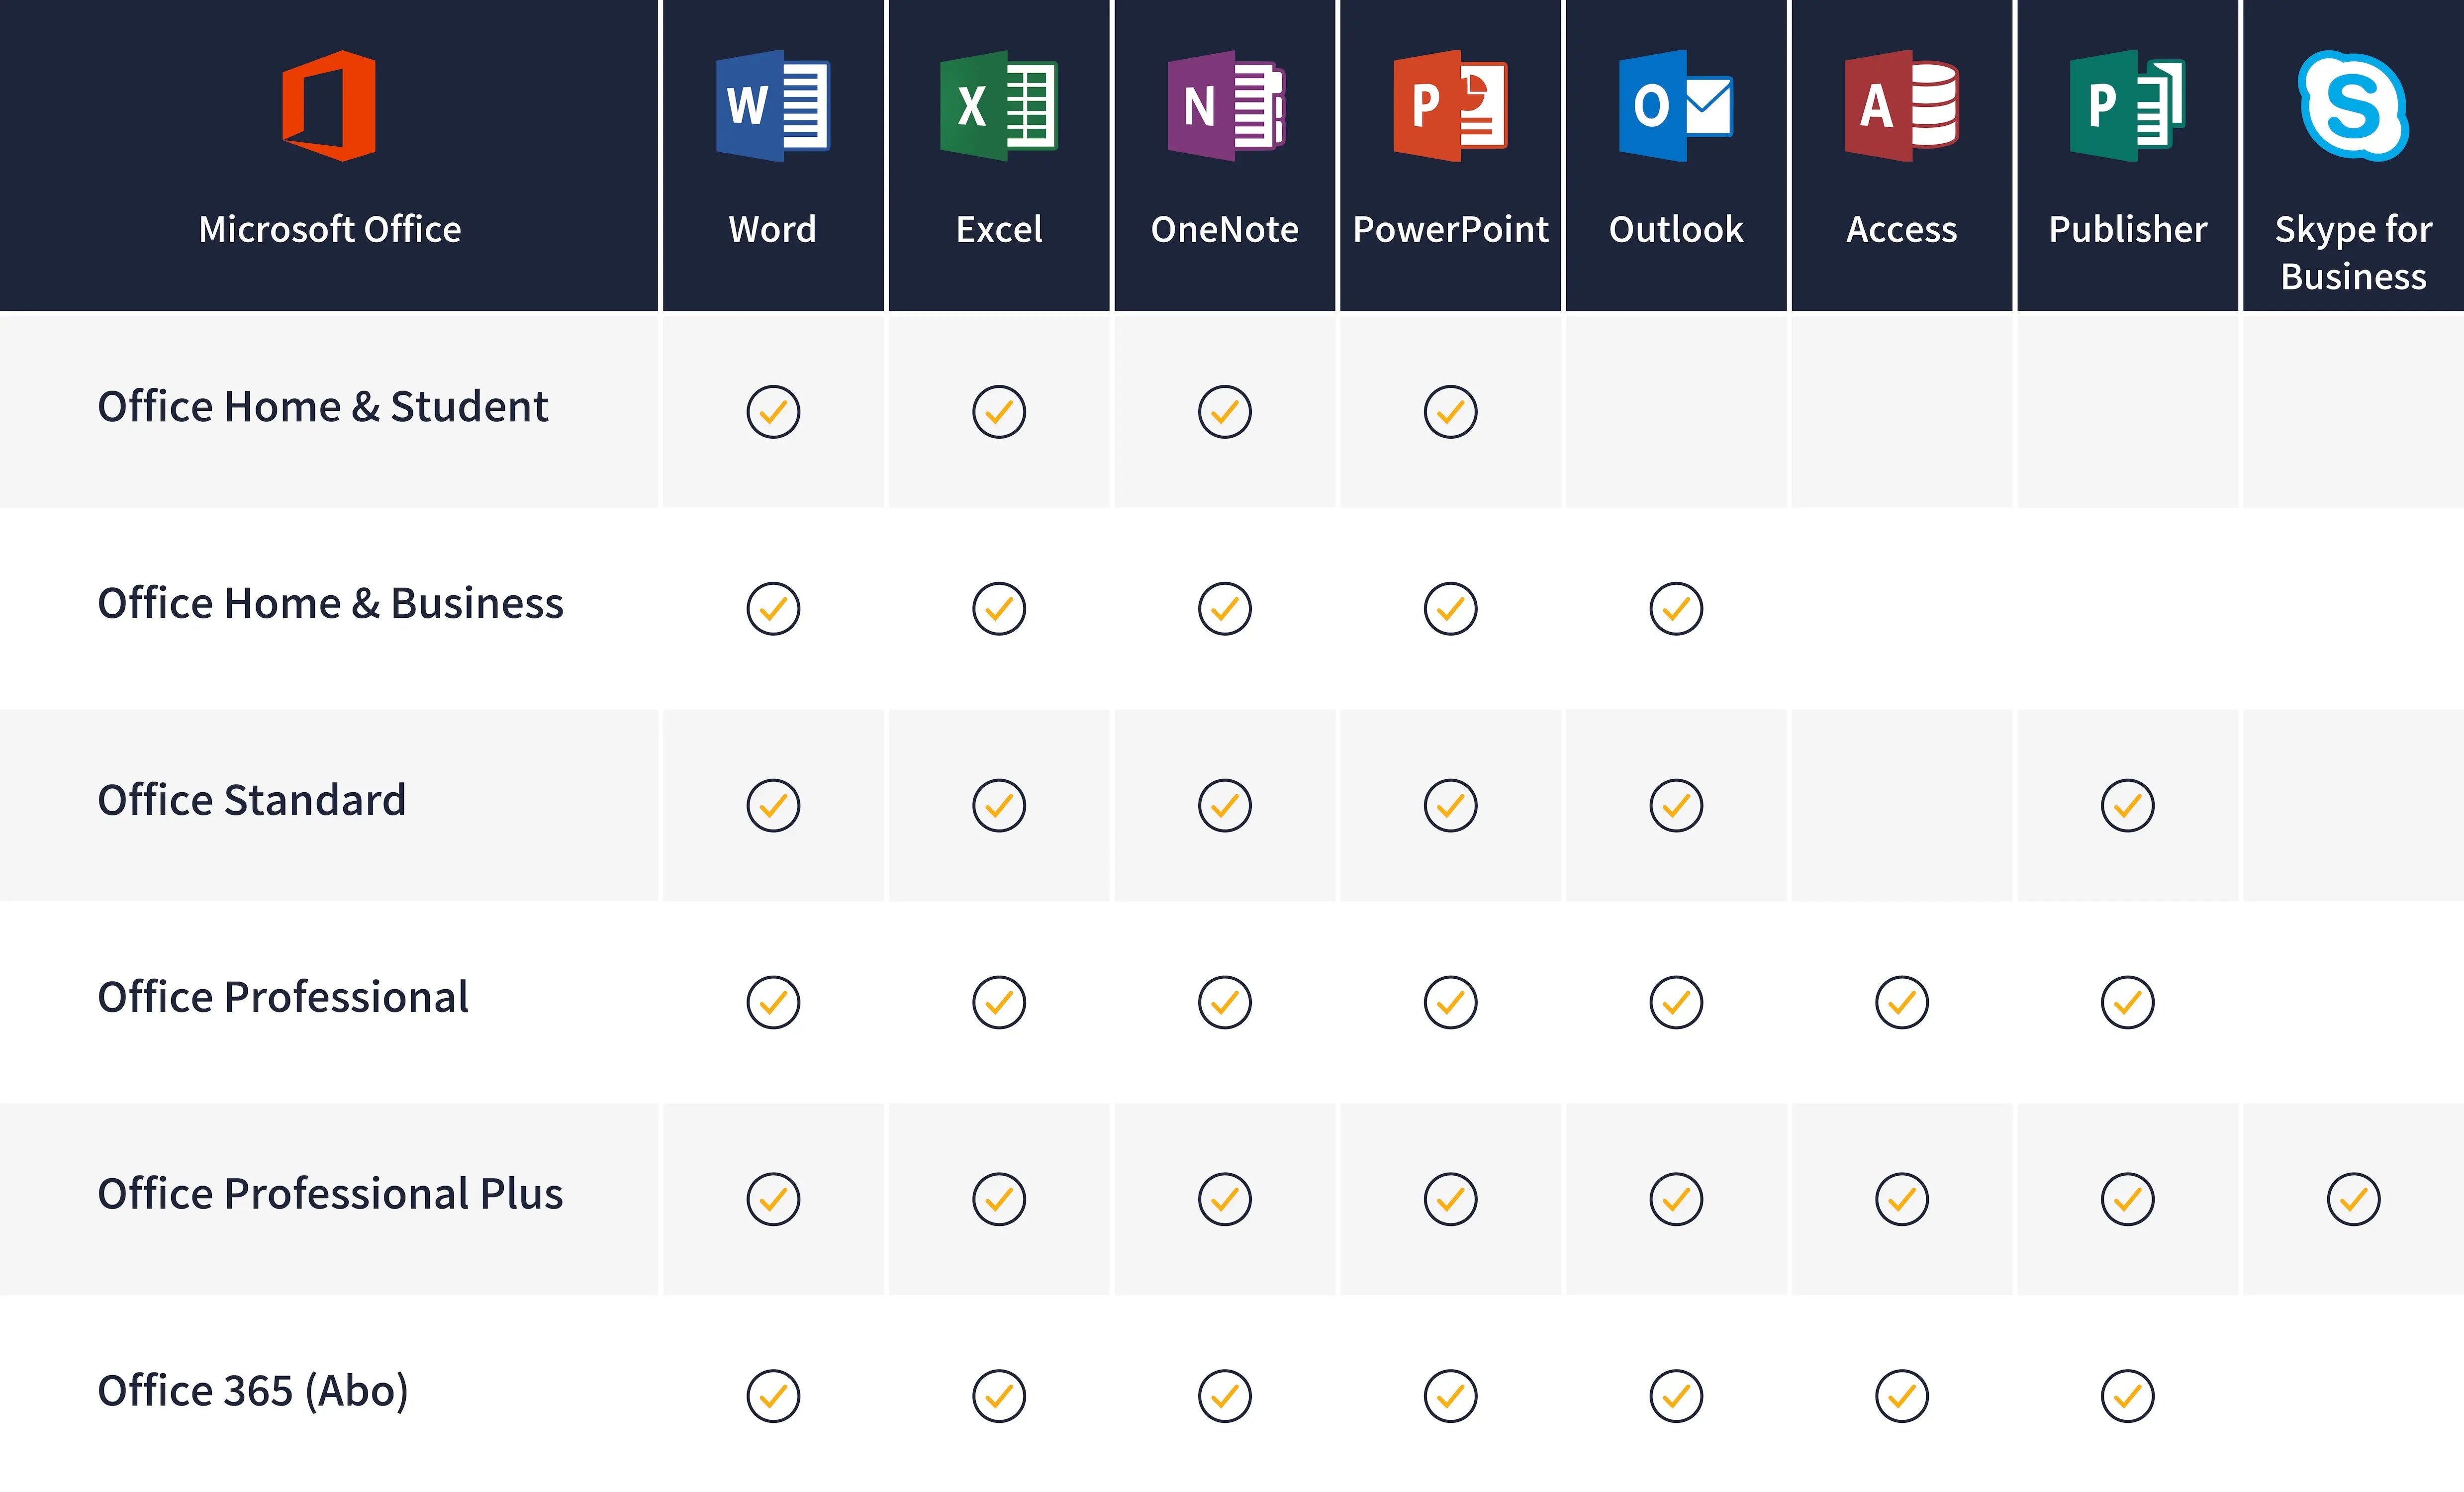 Microsoft- Microsoft Office 2021 Standard